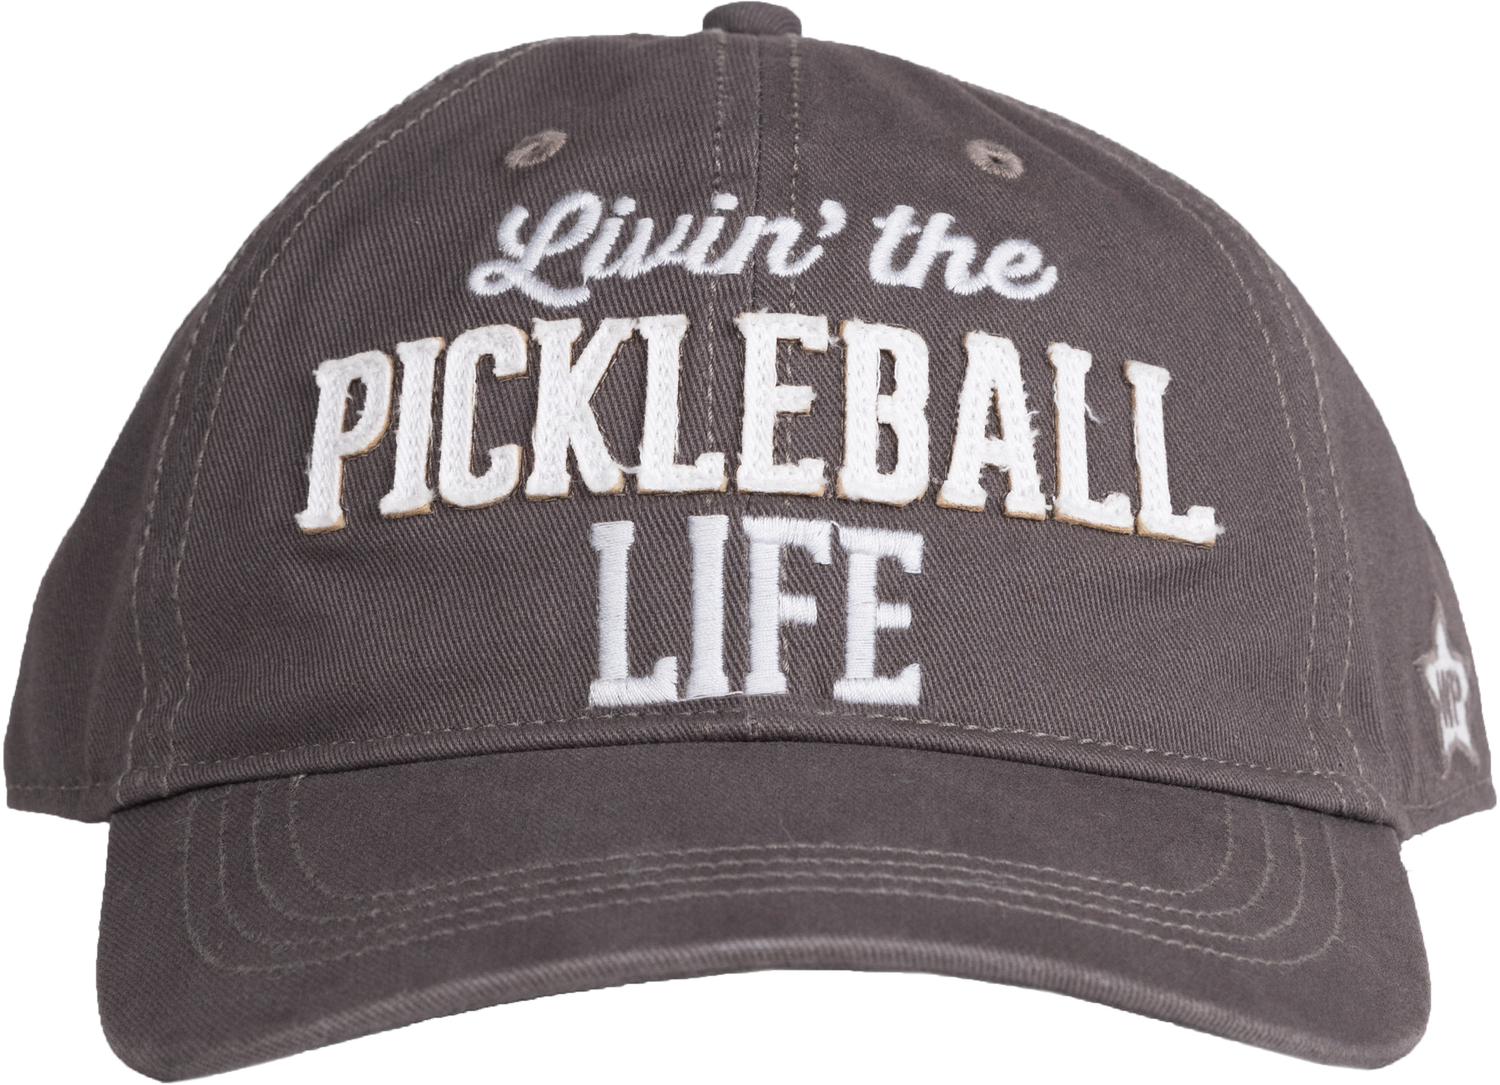 Pickleball Life by We People - Pickleball Life - Dark Gray Adjustable Hat